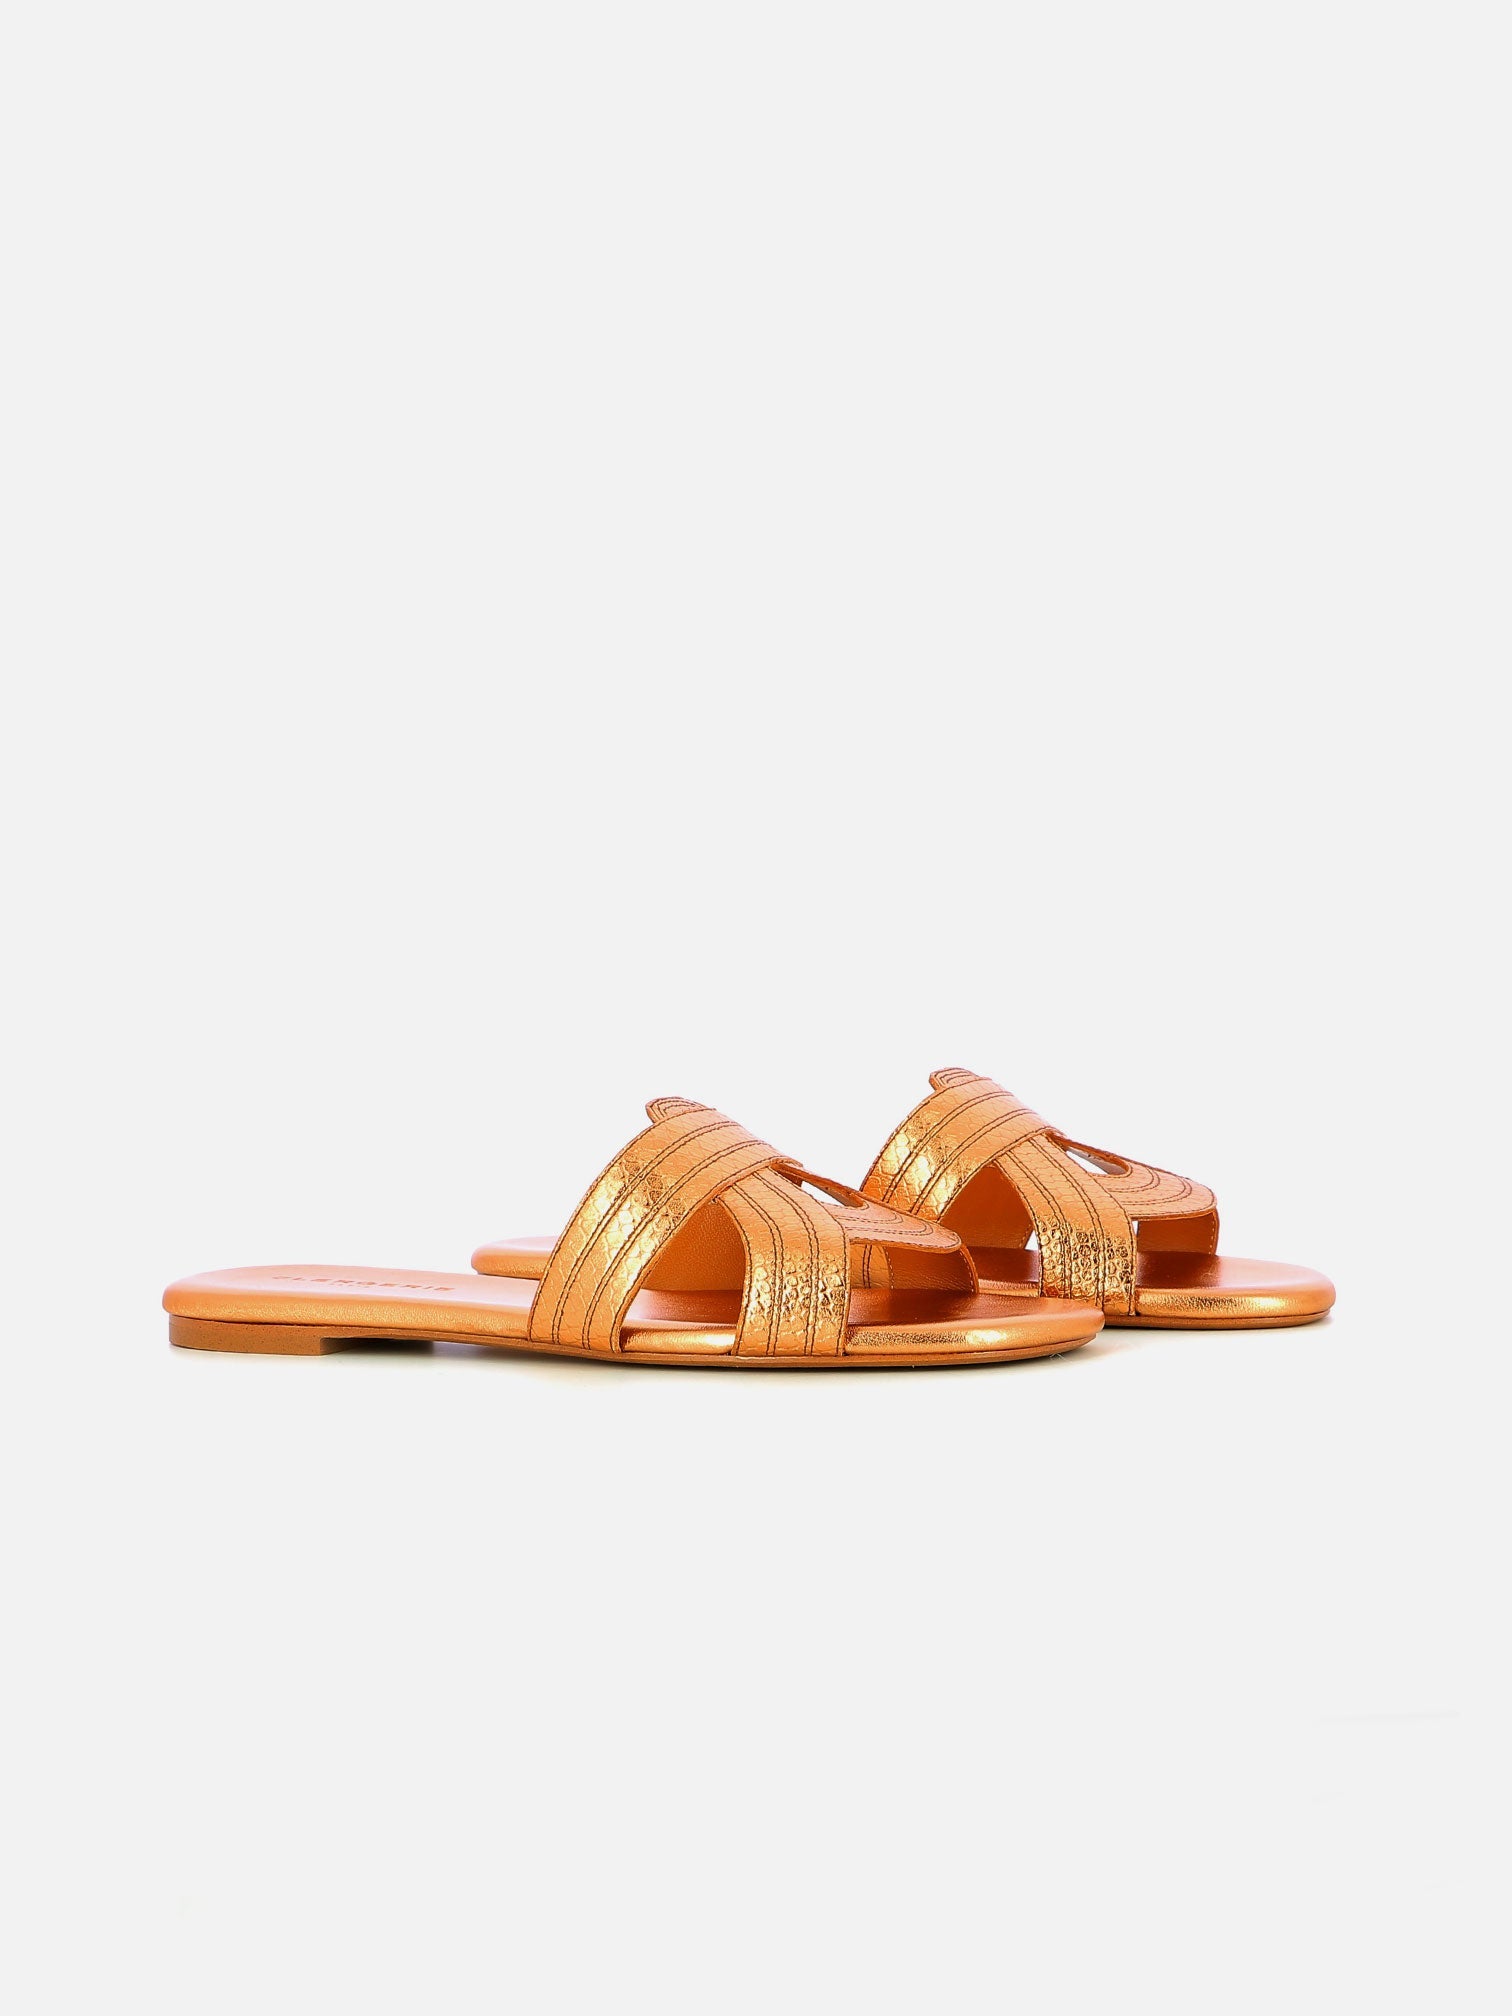 SANDALS - IVORY sandals, snake metallic effect desert - 3606063996242 - Clergerie Paris - Europe